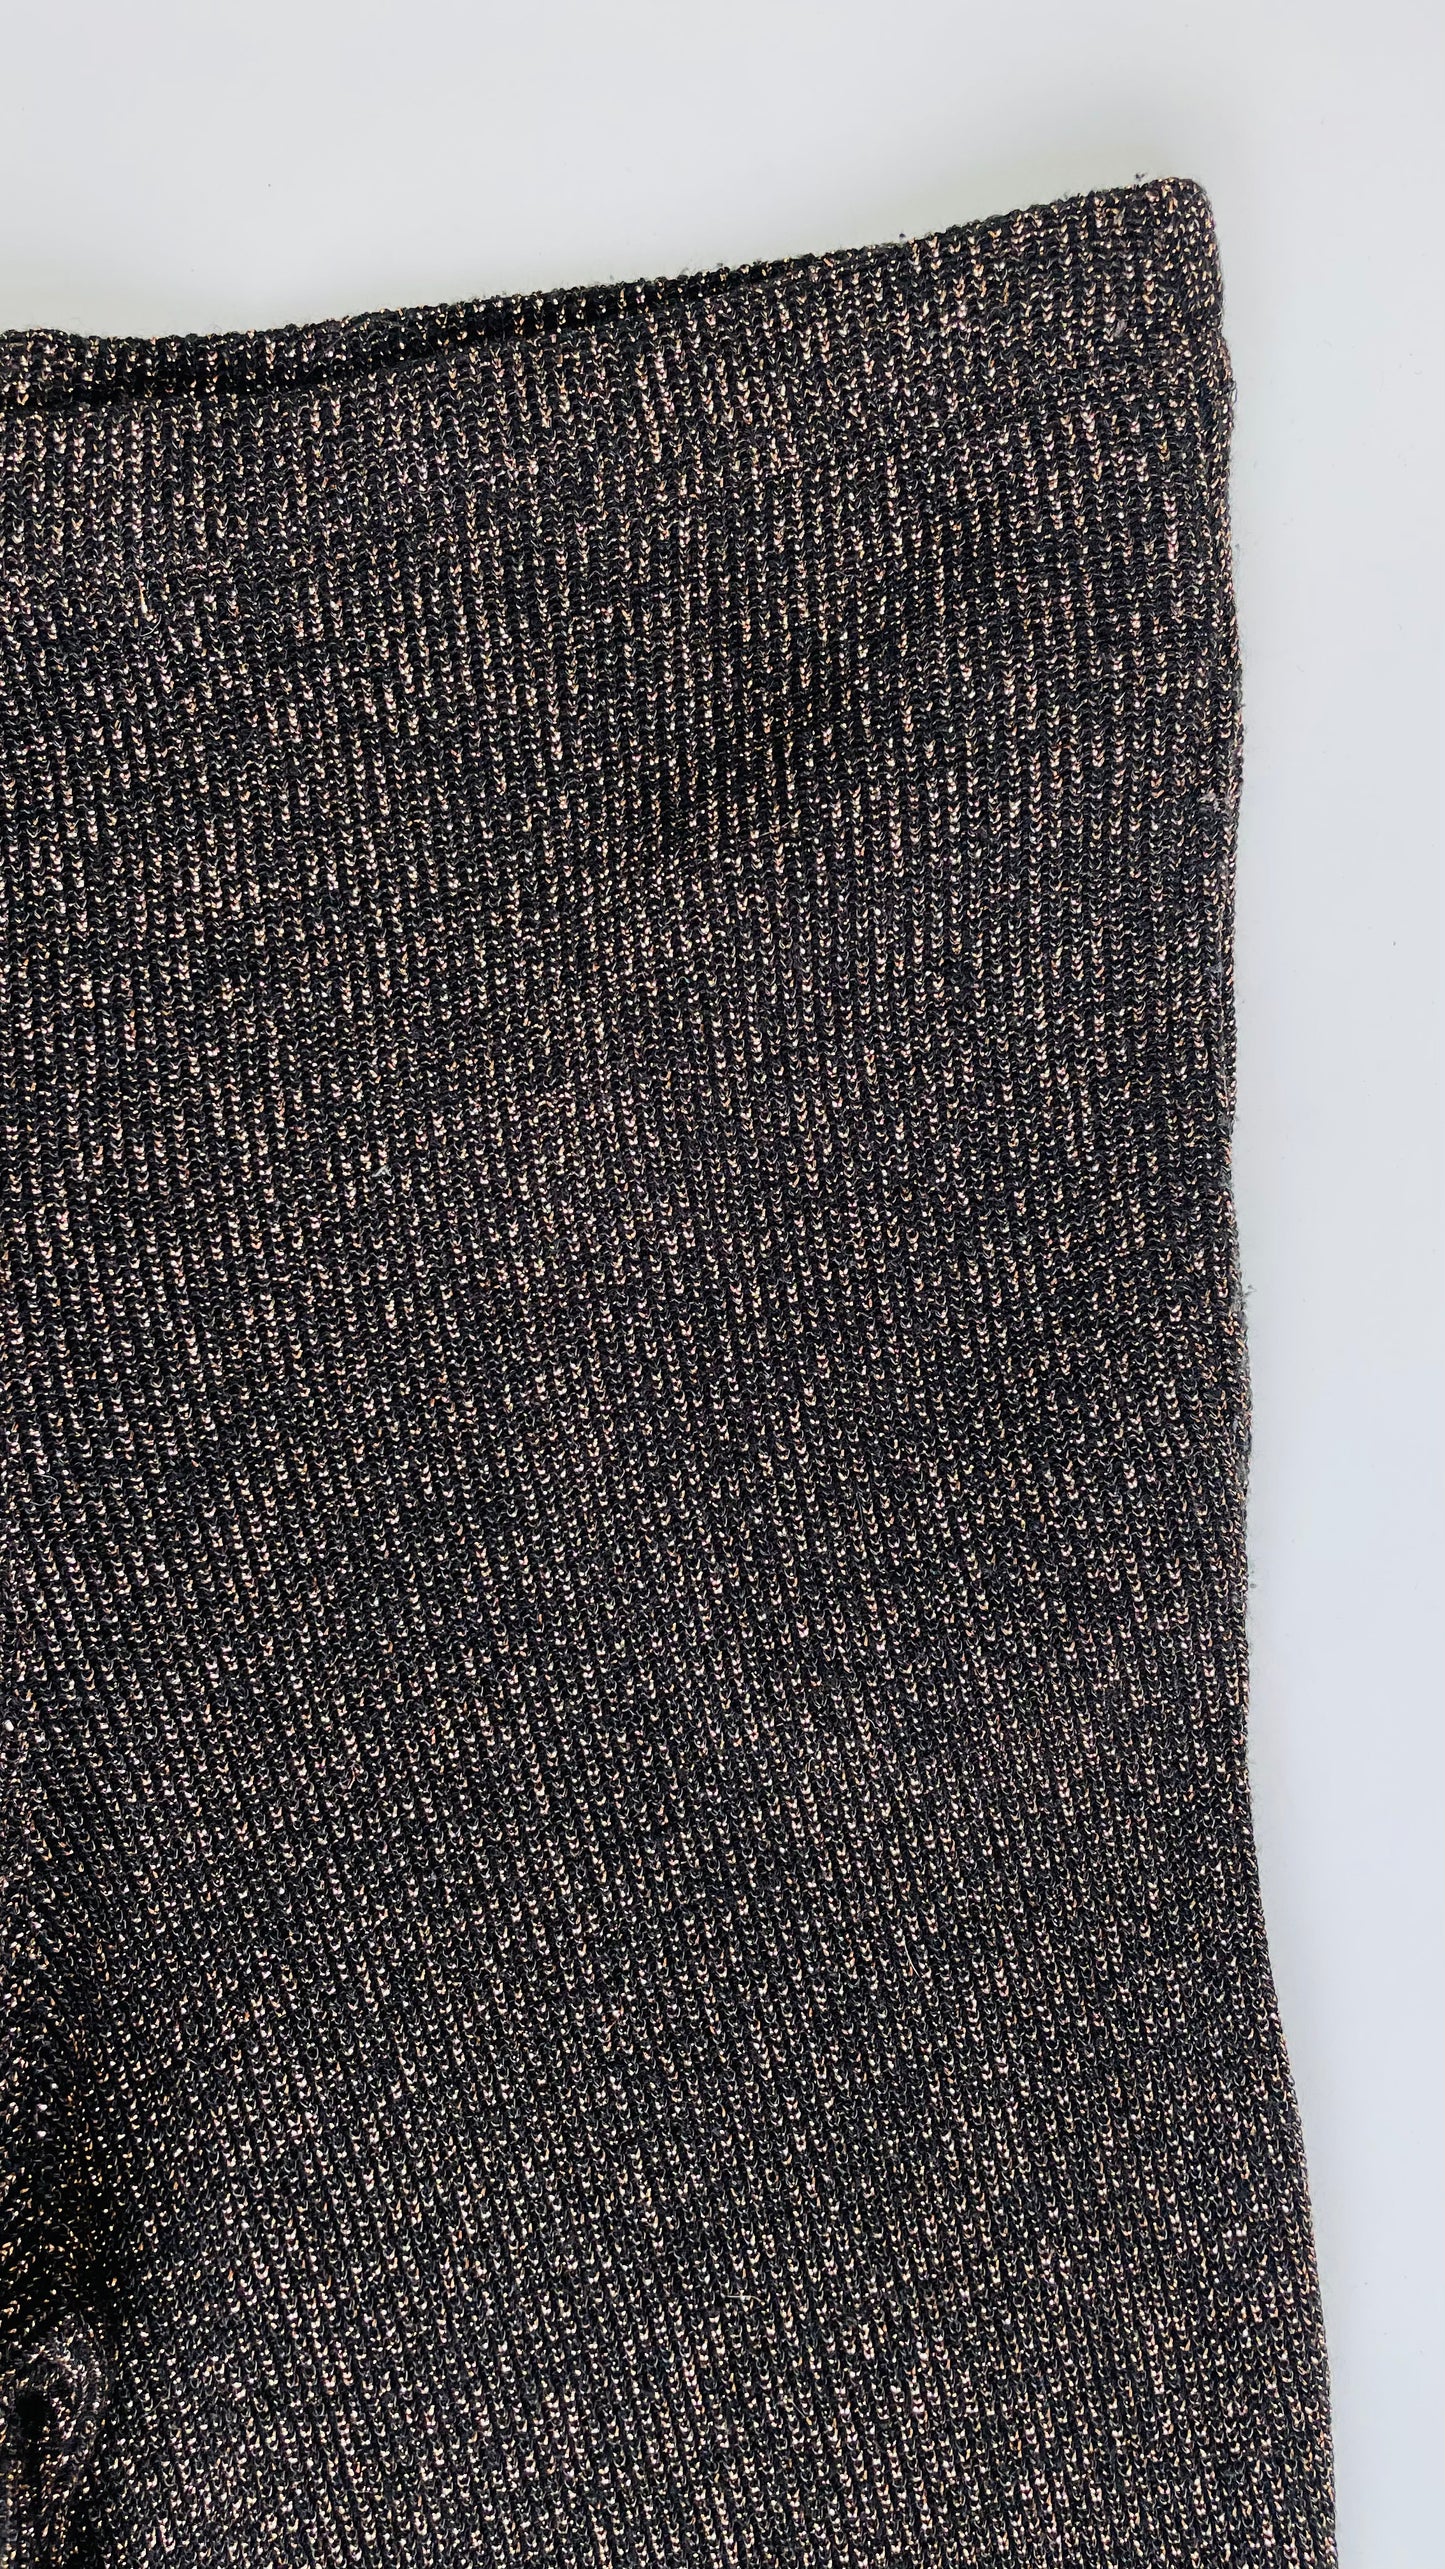 80s metallic copper lurex knit sweater pants - Size L